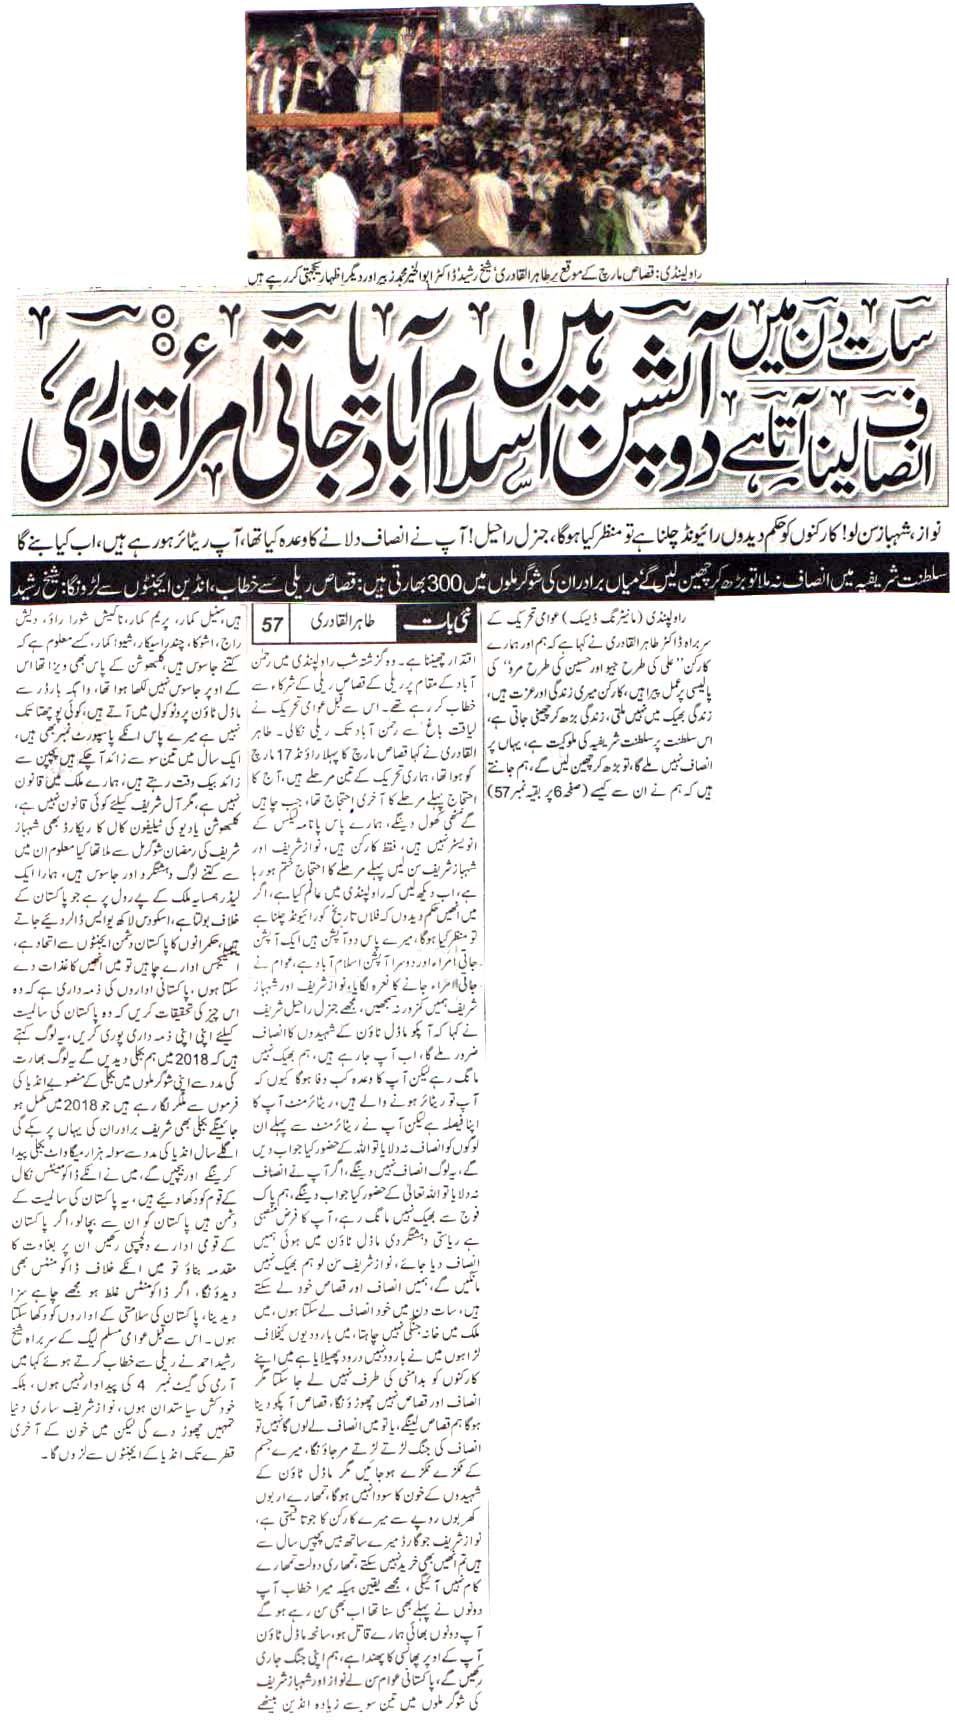 Minhaj-ul-Quran  Print Media Coverage DAILY NAI BAAT FRONT PAGE